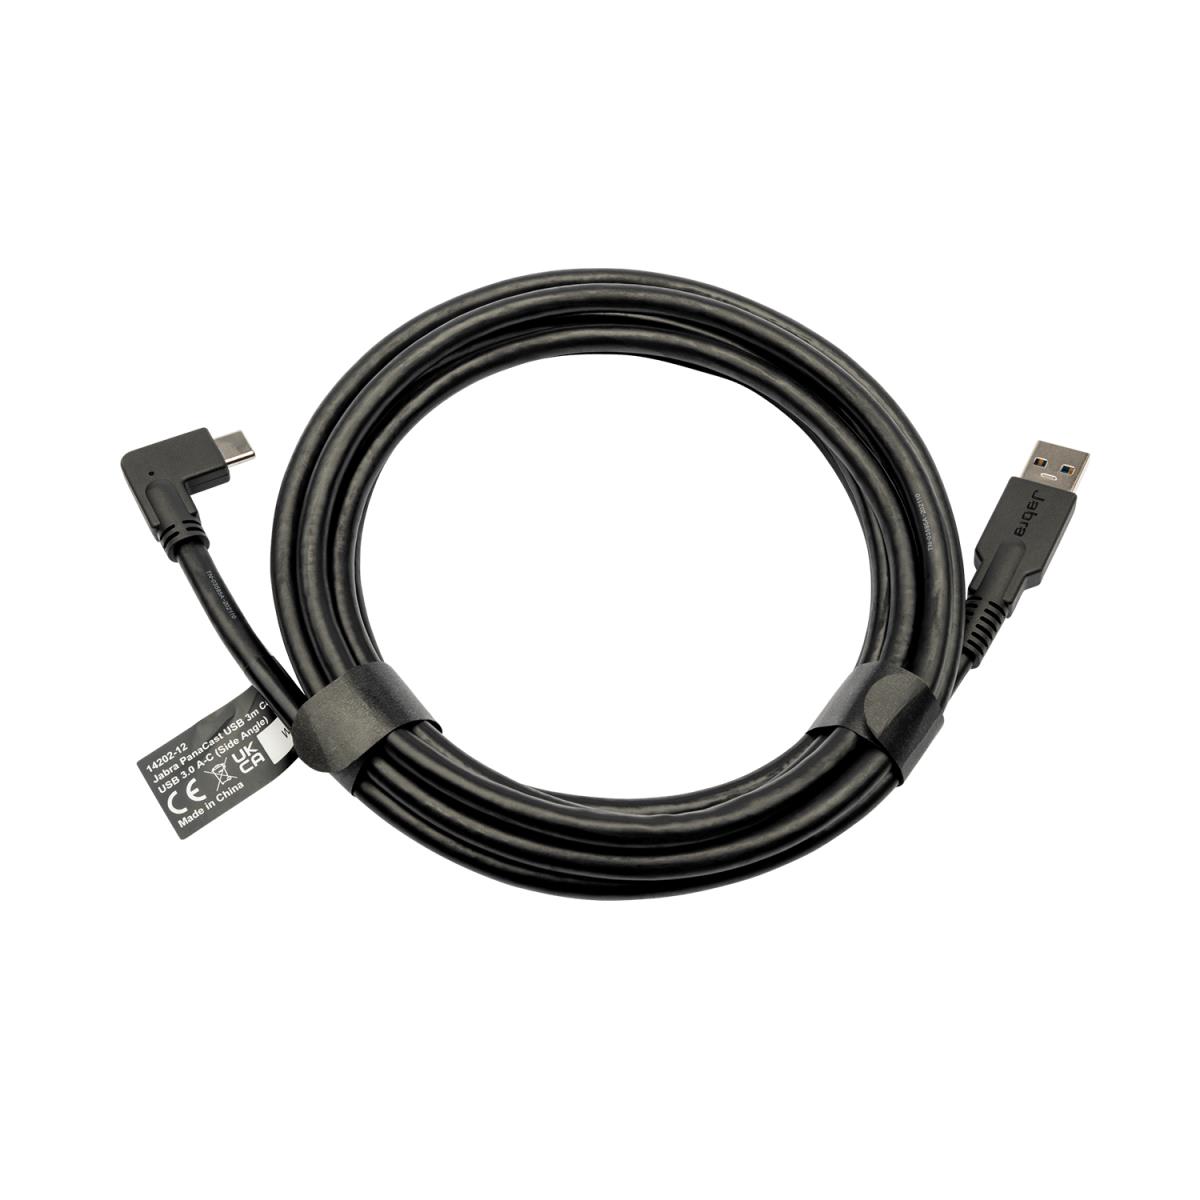 Jabra 14202-12 - PanaCast USB Cable,USB-A to USB-C, 3 Meter